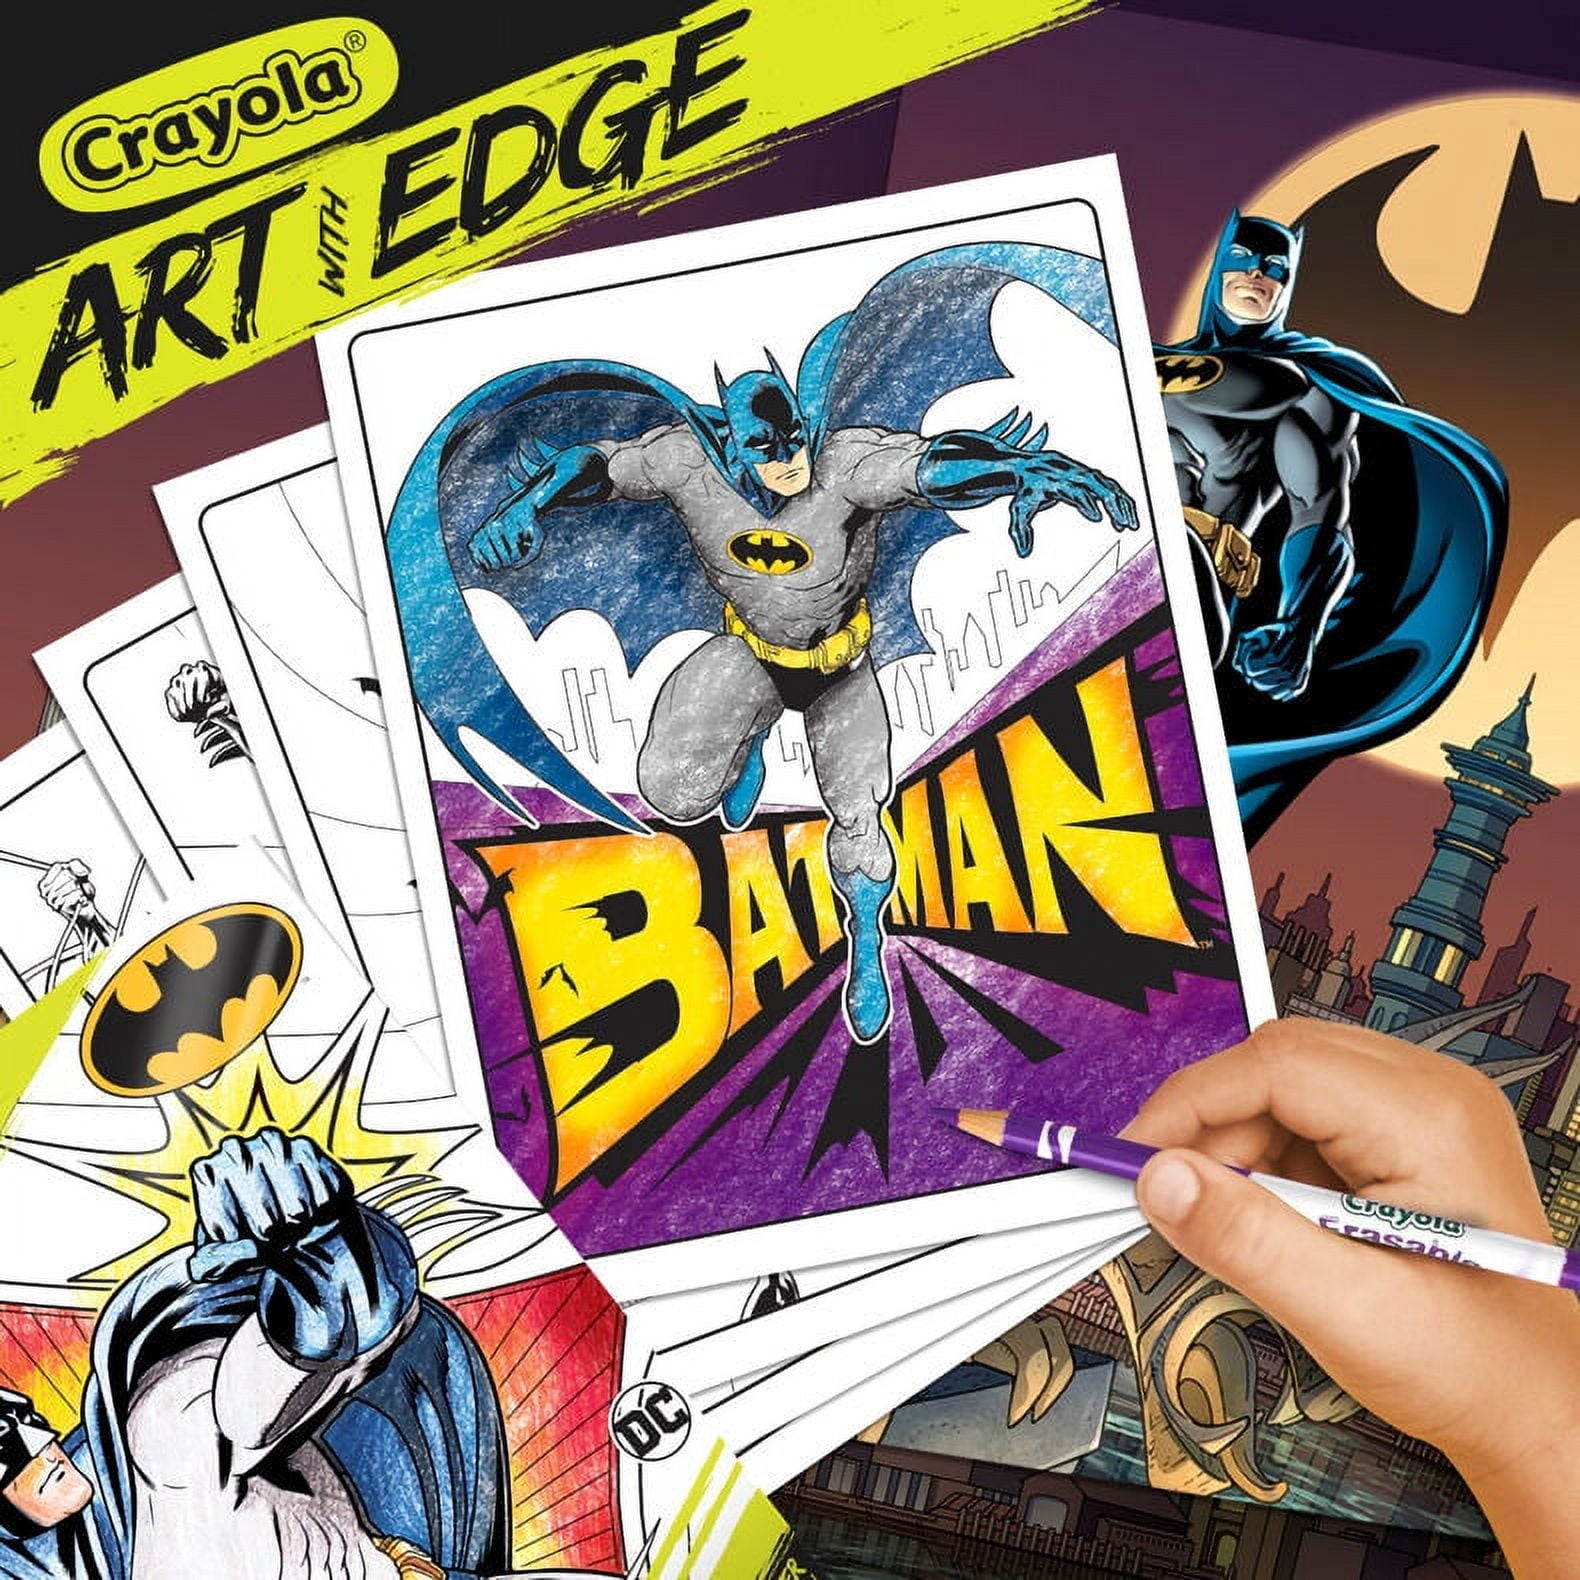 Professional Artist Colors a CHILDRENS Coloring Book?. Again, BATMAN